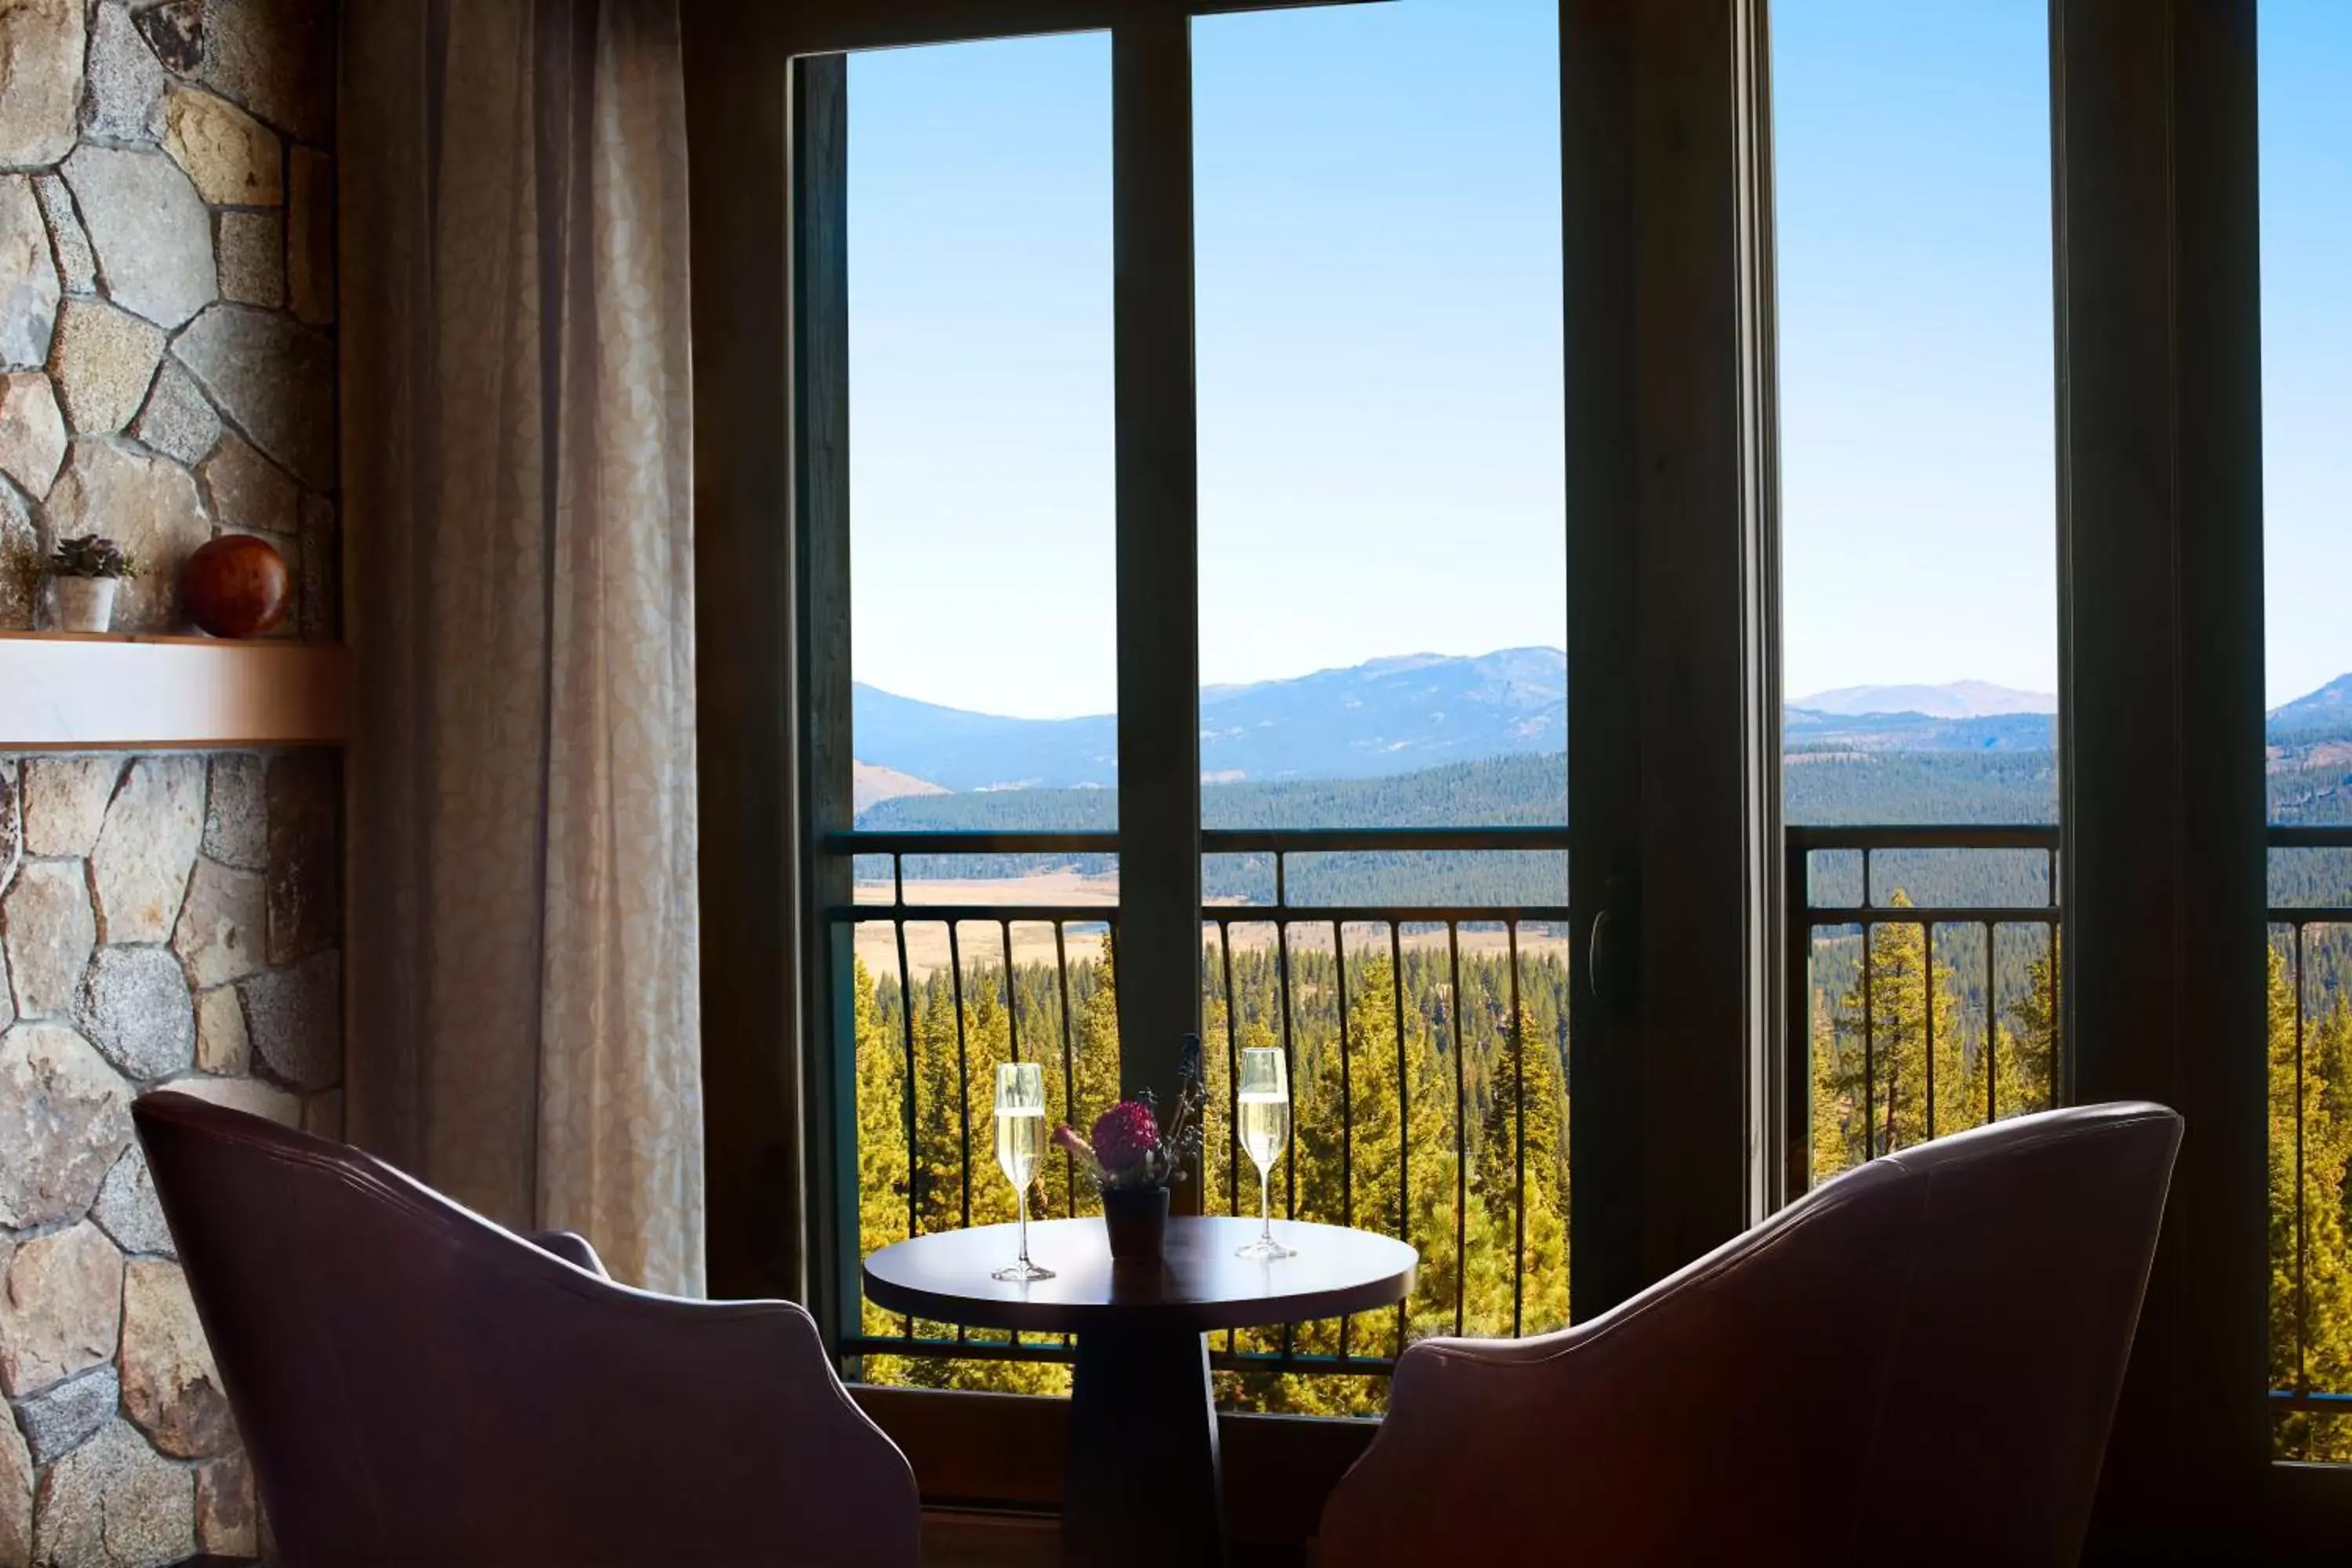 Day in The Ritz-Carlton, Lake Tahoe